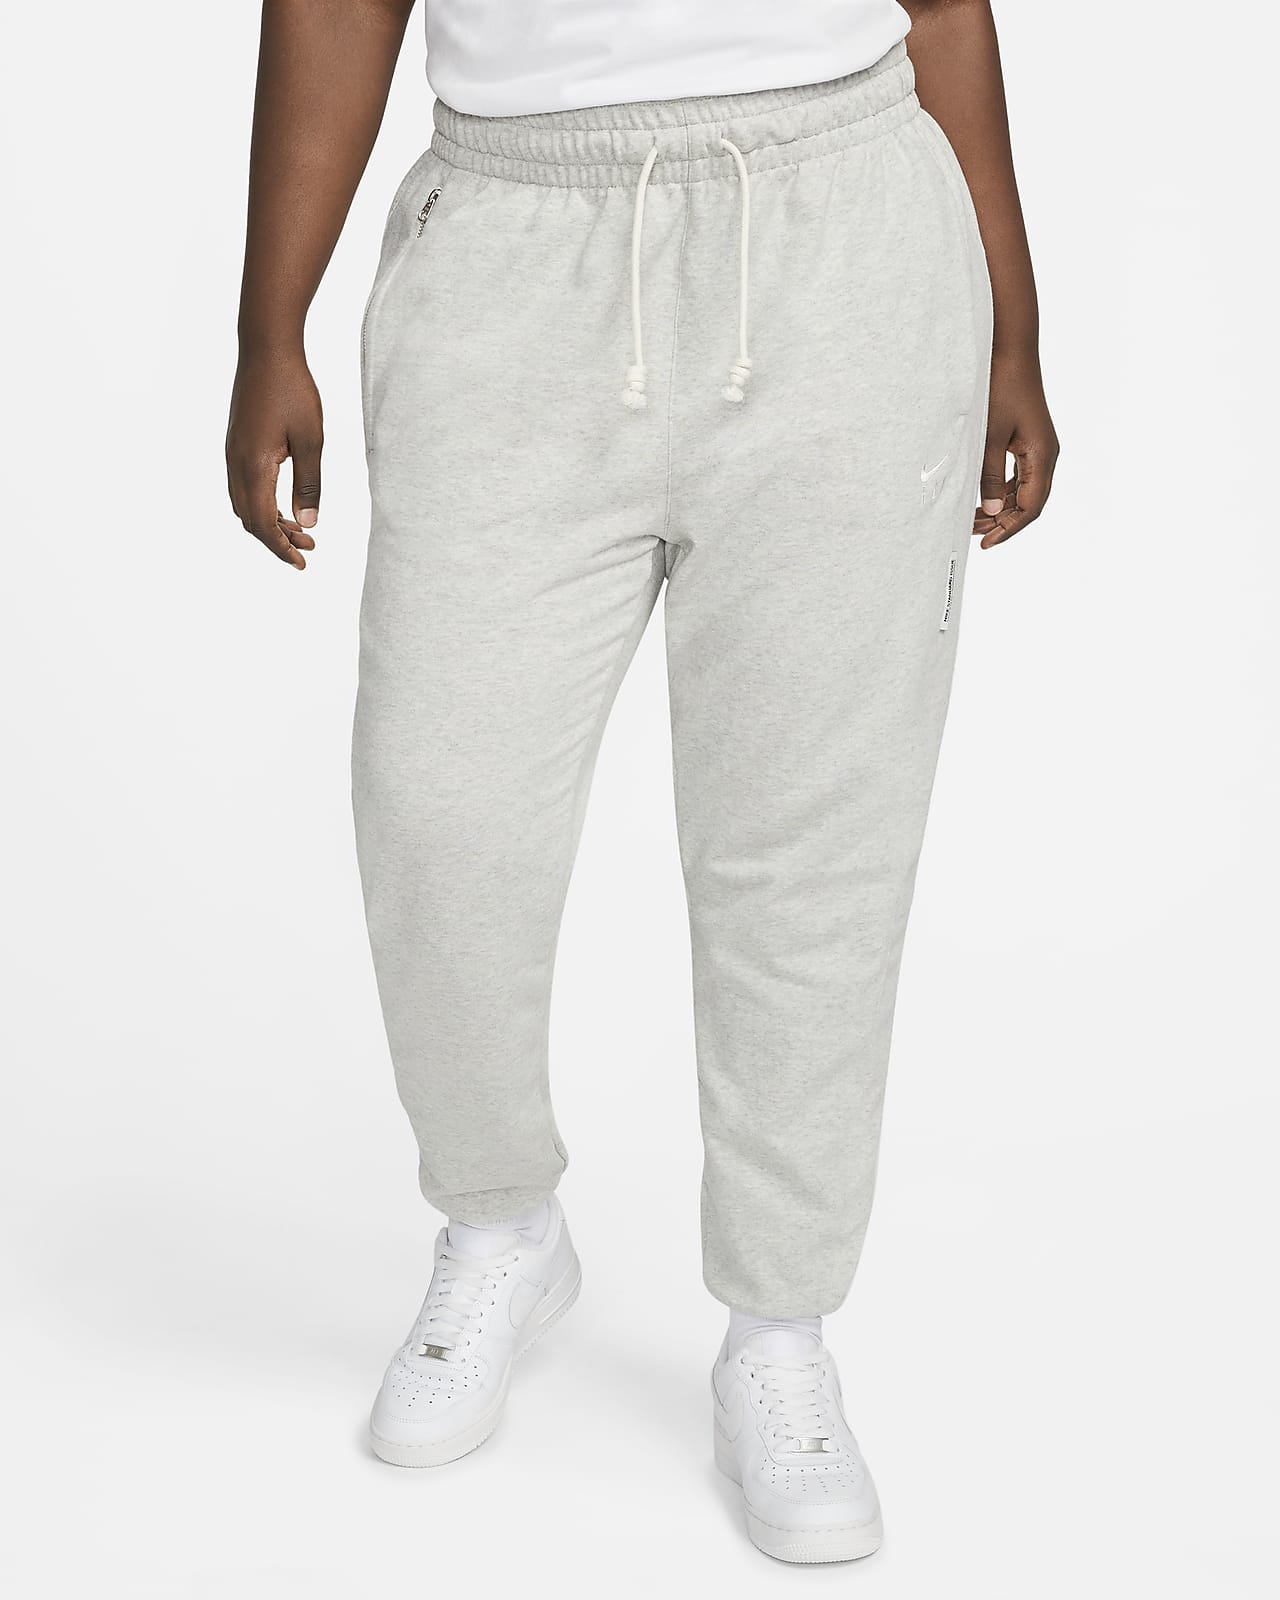 Pantalones de básquetbol para Nike Dri-FIT Swoosh Fly Issue grande).